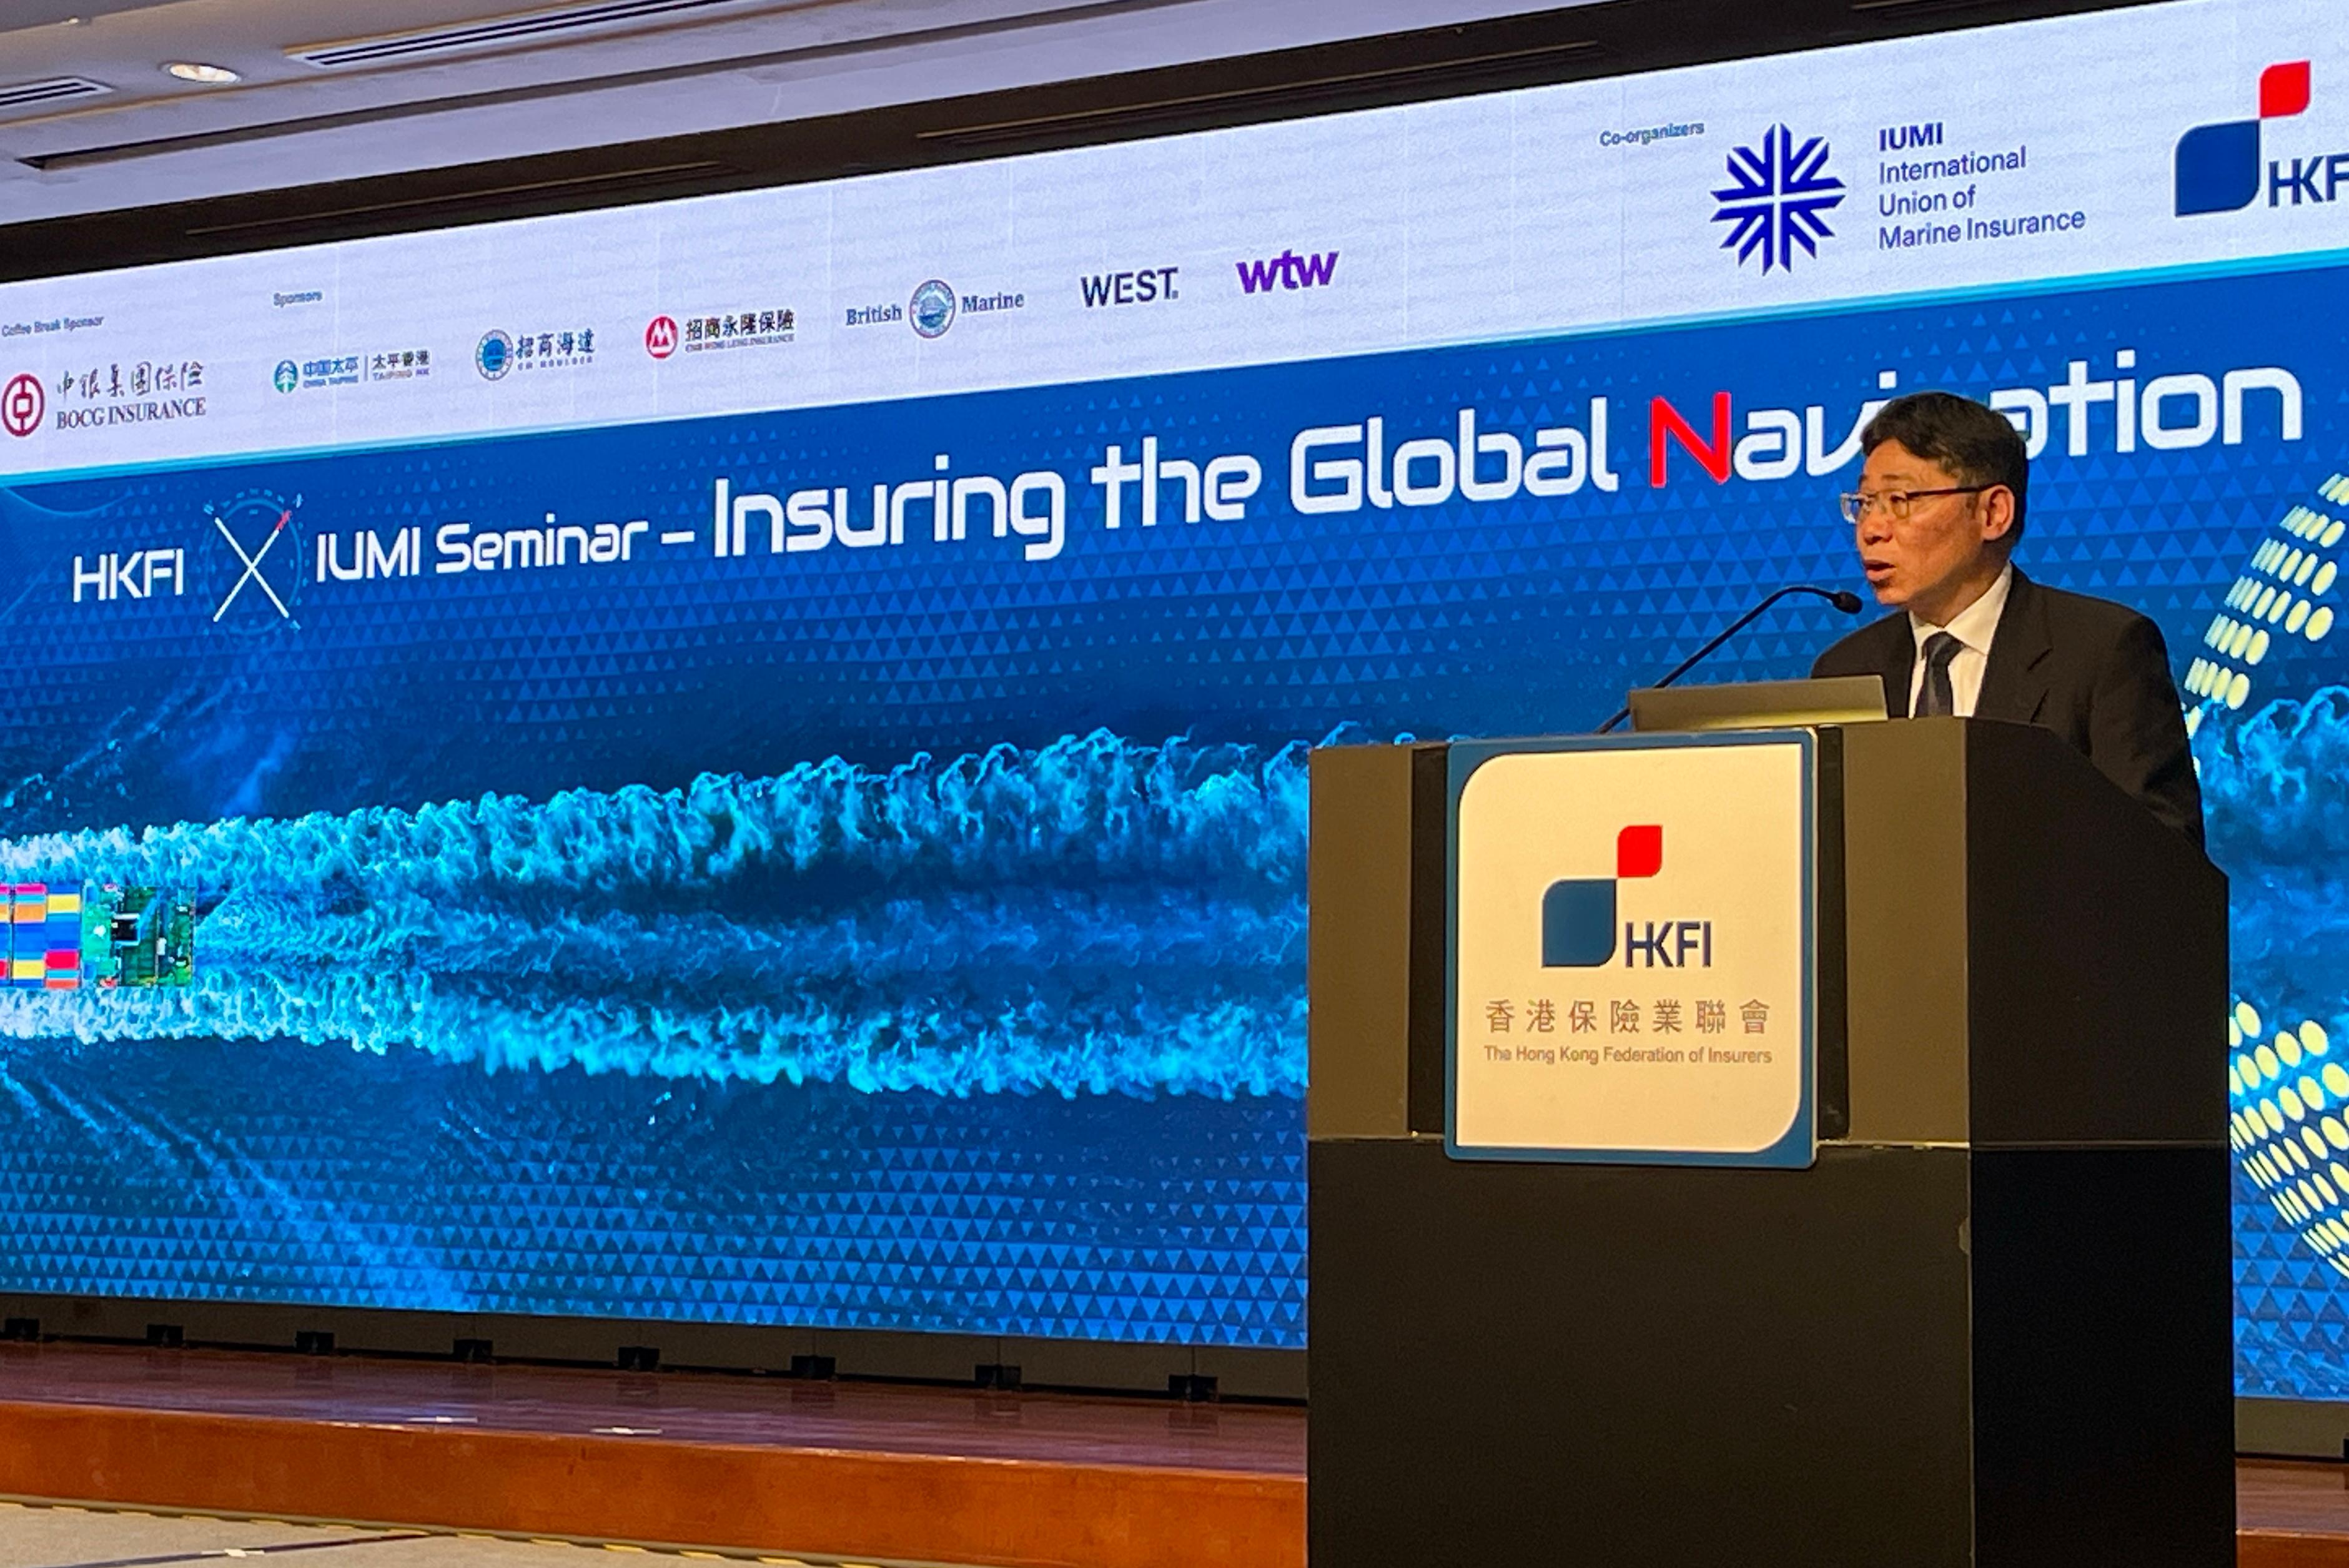 The Secretary for Transport and Logistics, Mr Lam Sai-hung, speaks at the HKFI x IUMI Seminar - Insuring the Global Navigation today (November 21).